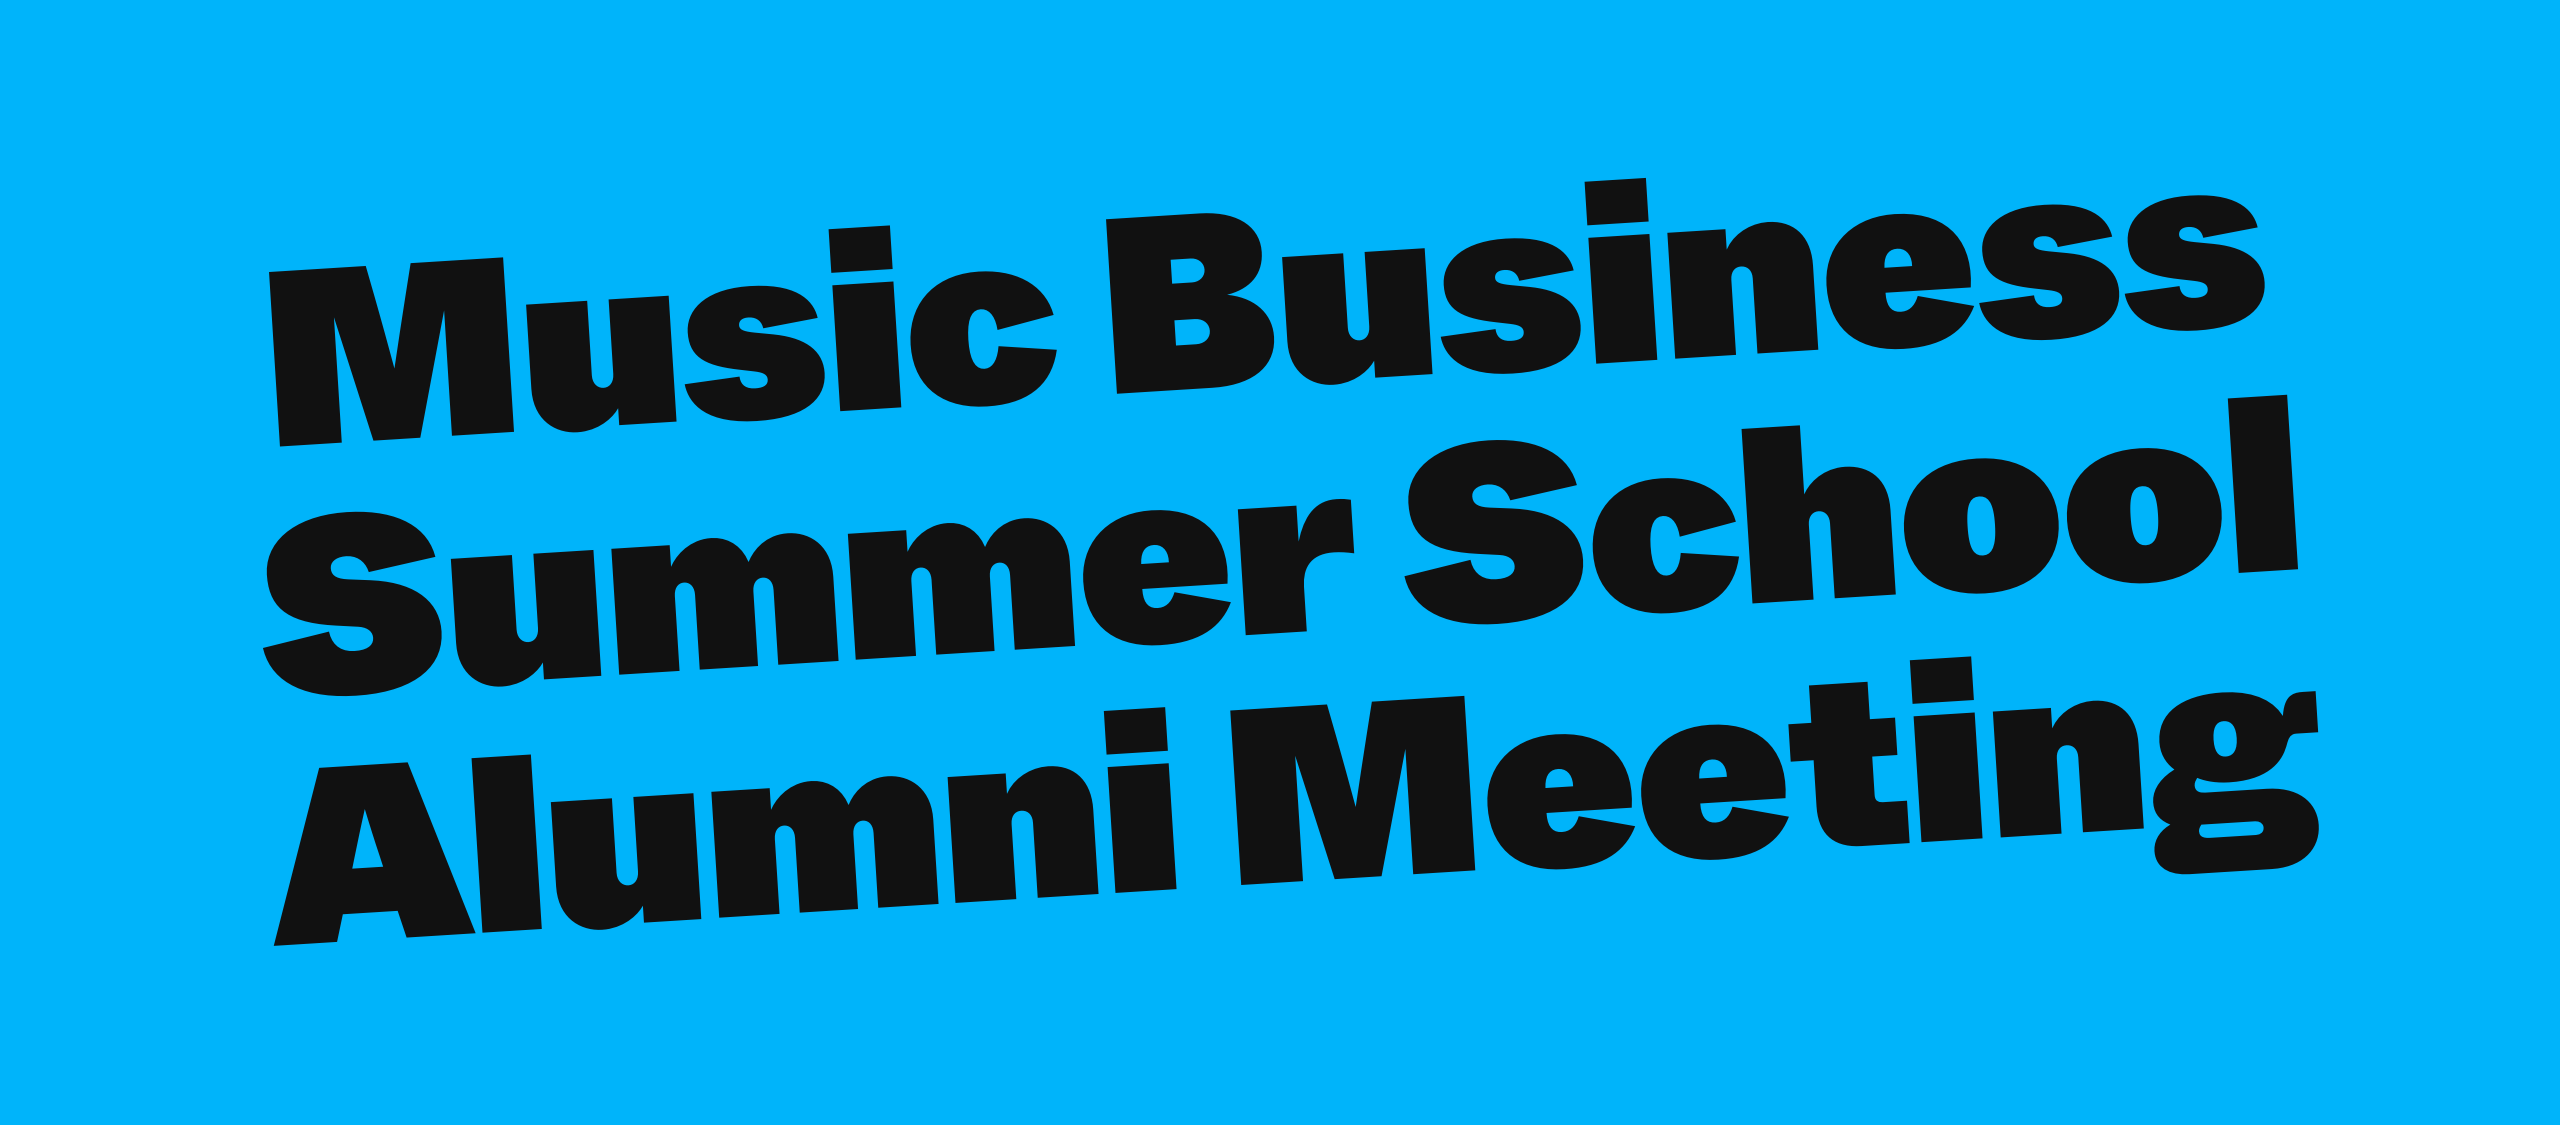 Music Business Summer School Alumni Meeting